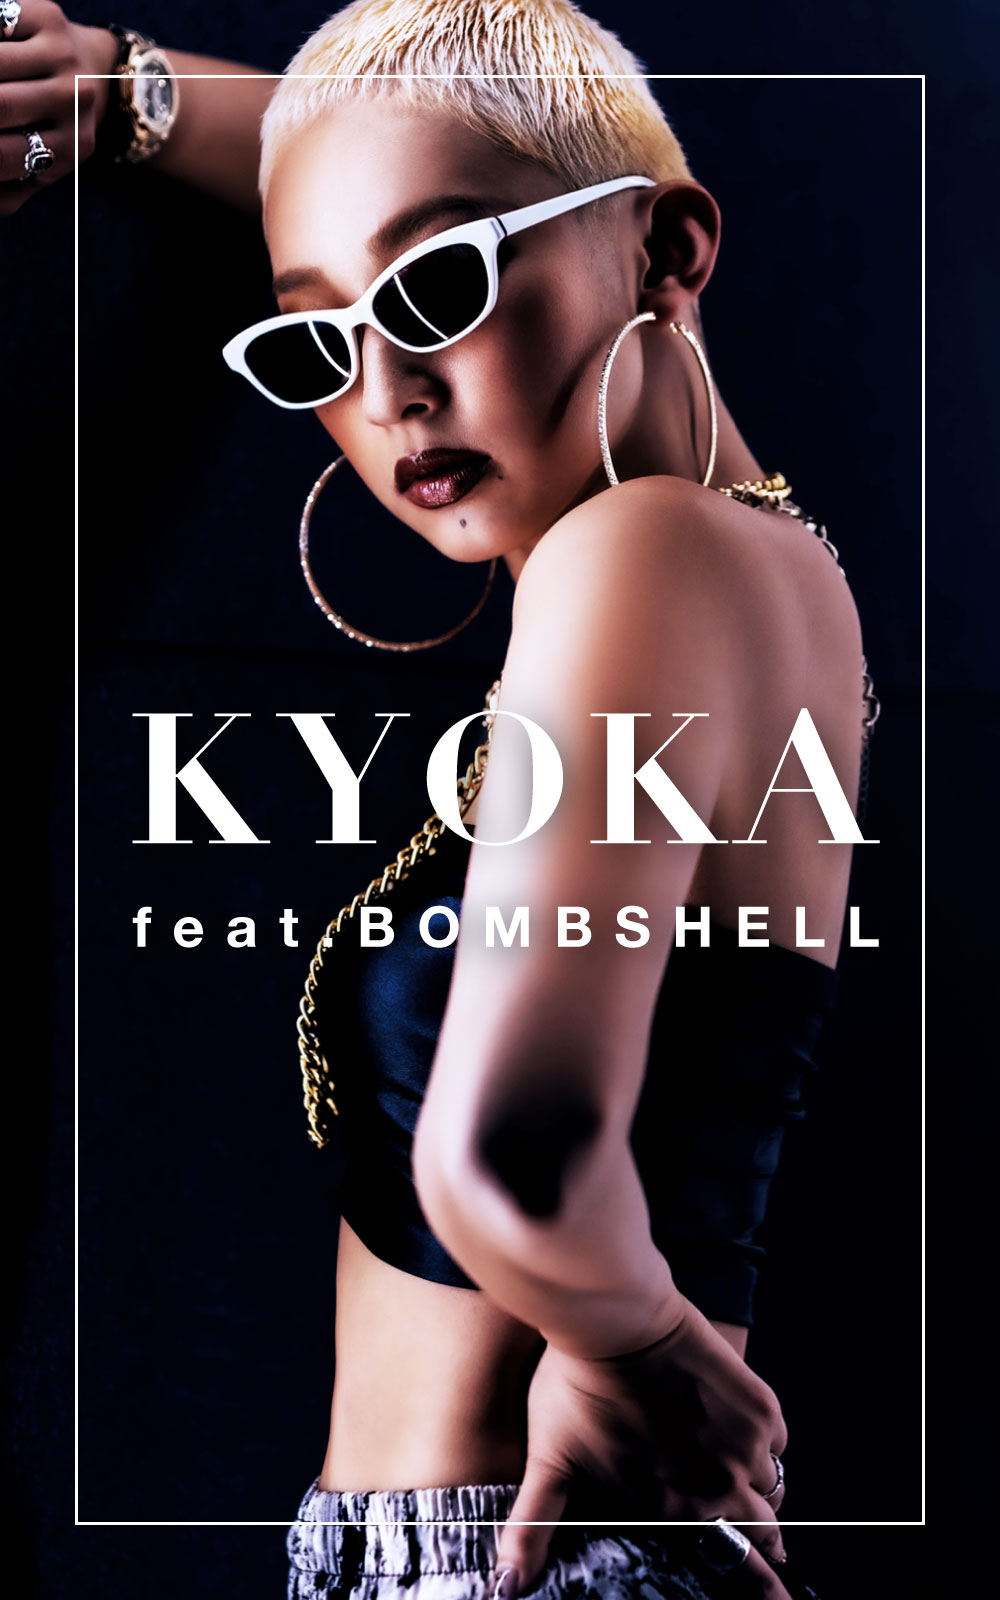 RUSHBALL KYOKA feat bombshell